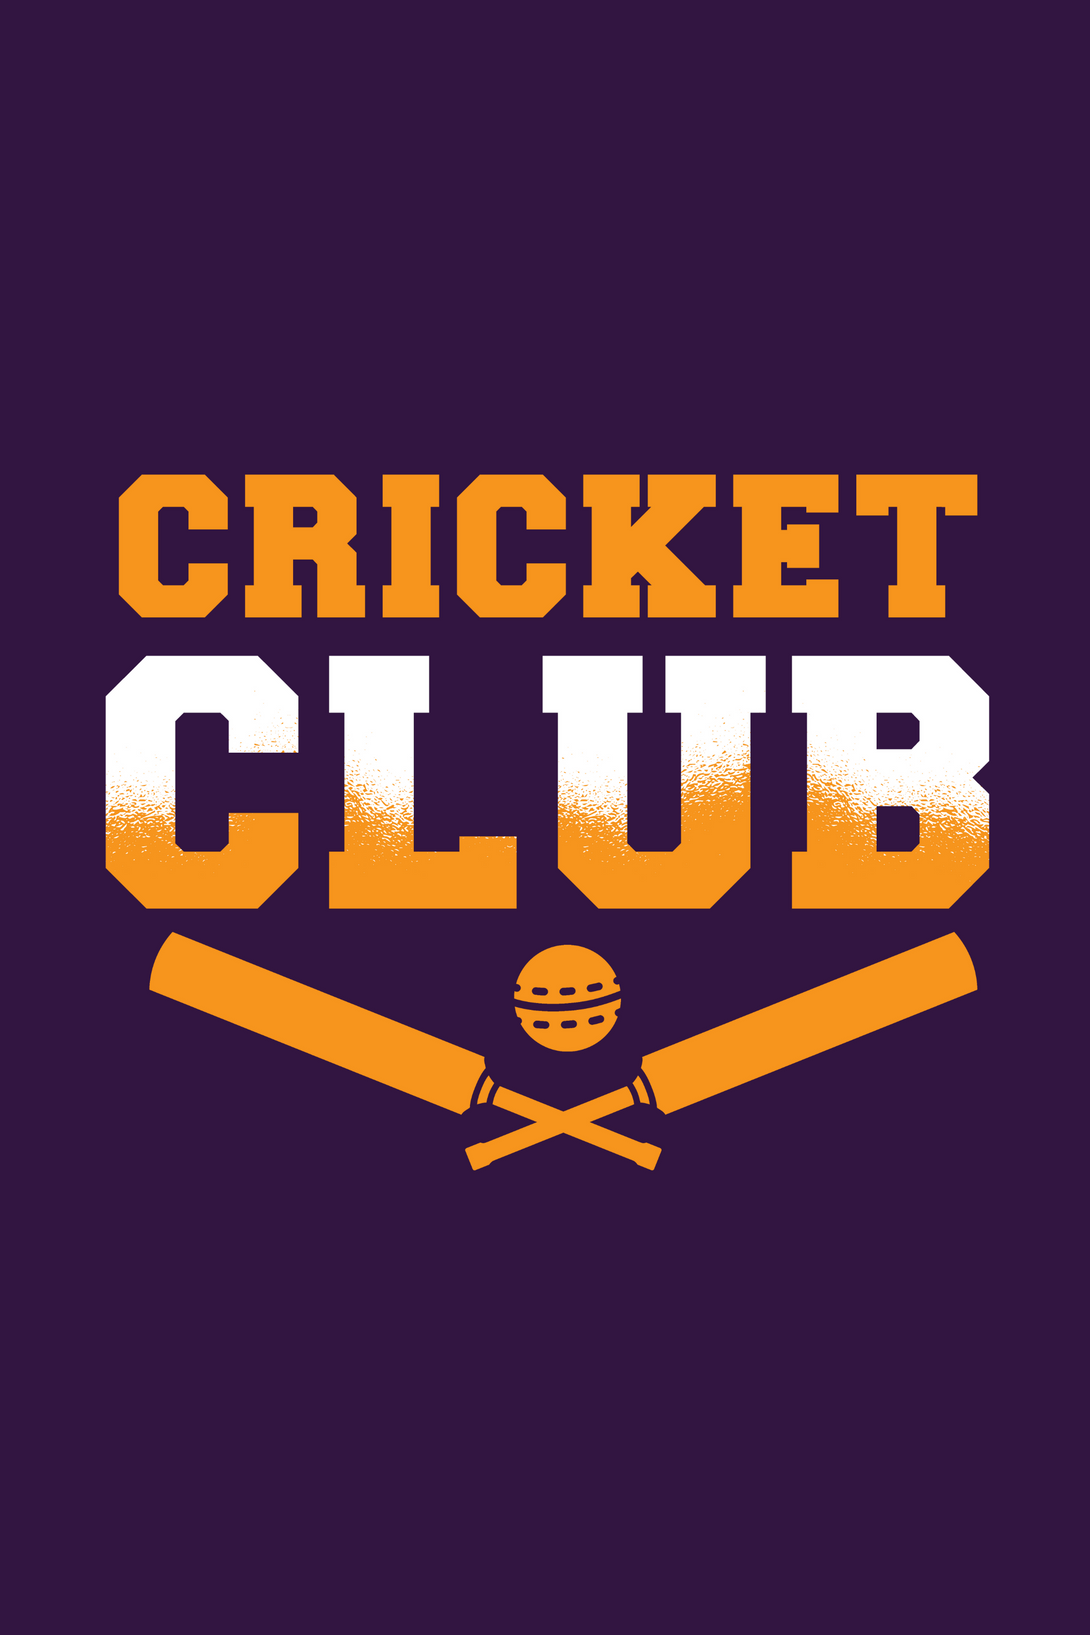 Cricket Club Printed T-Shirt For Men - WowWaves - 1